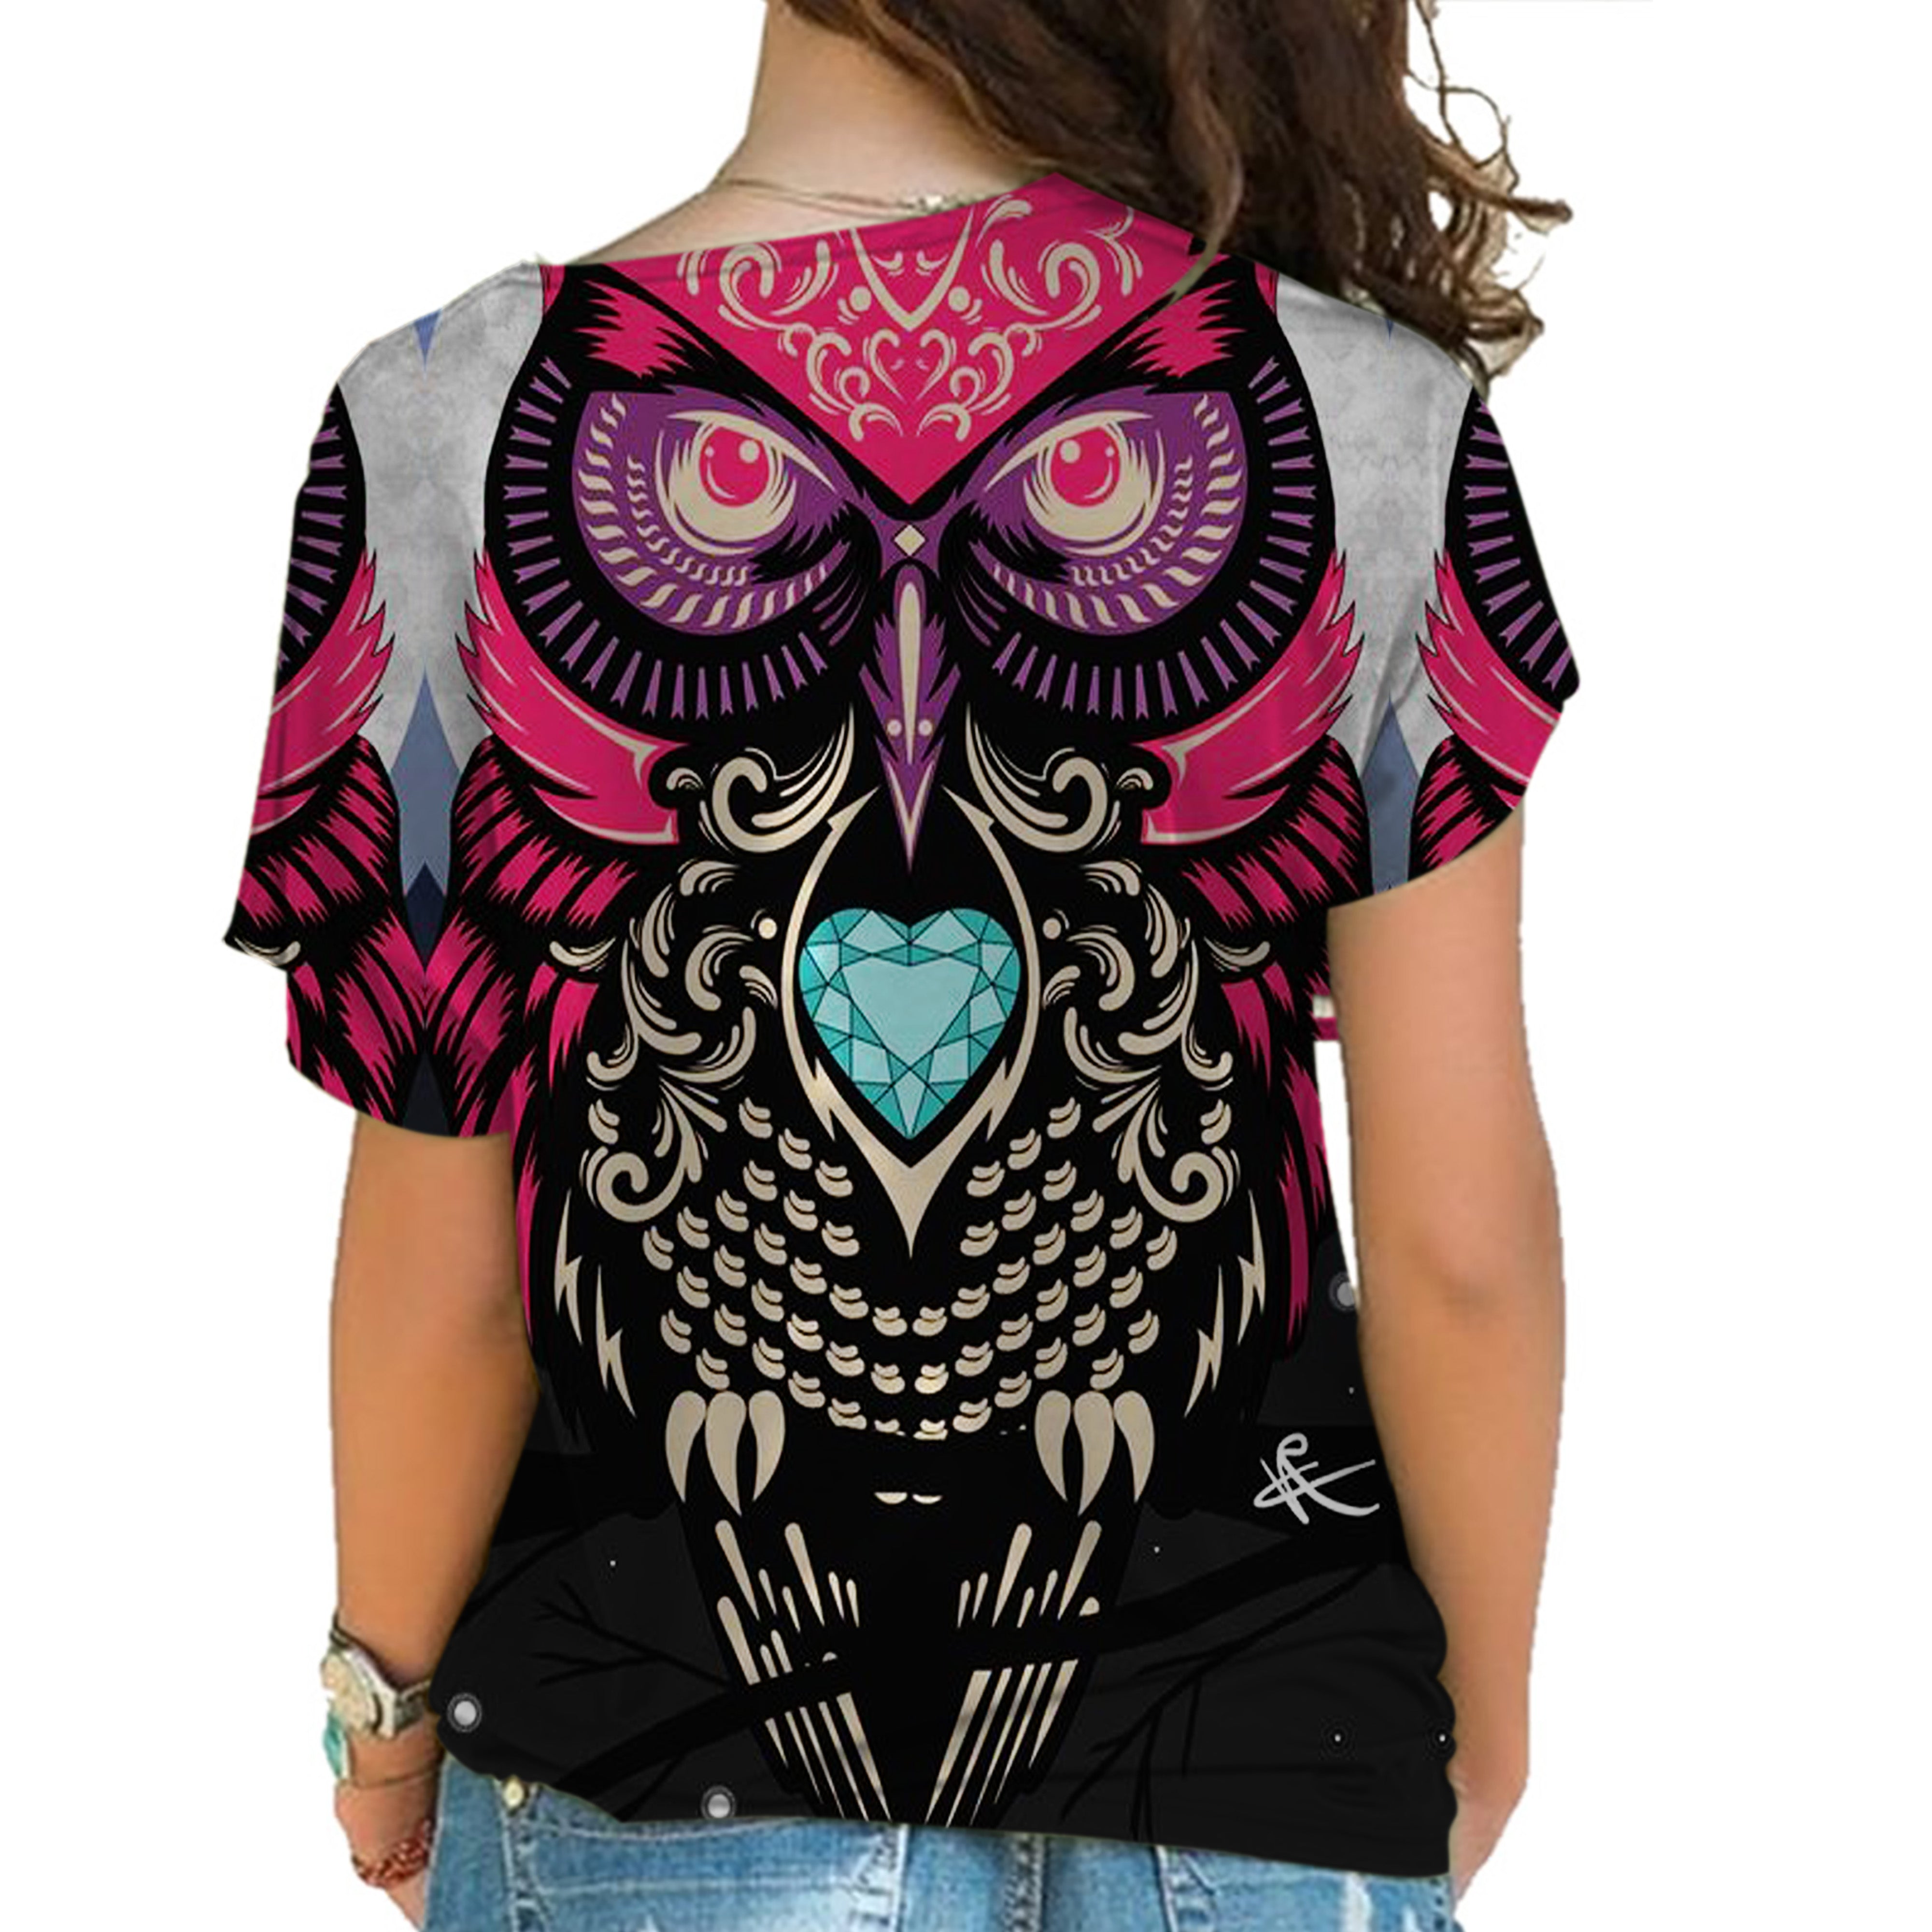 Powwow Store native american cross shoulder shirt 1105